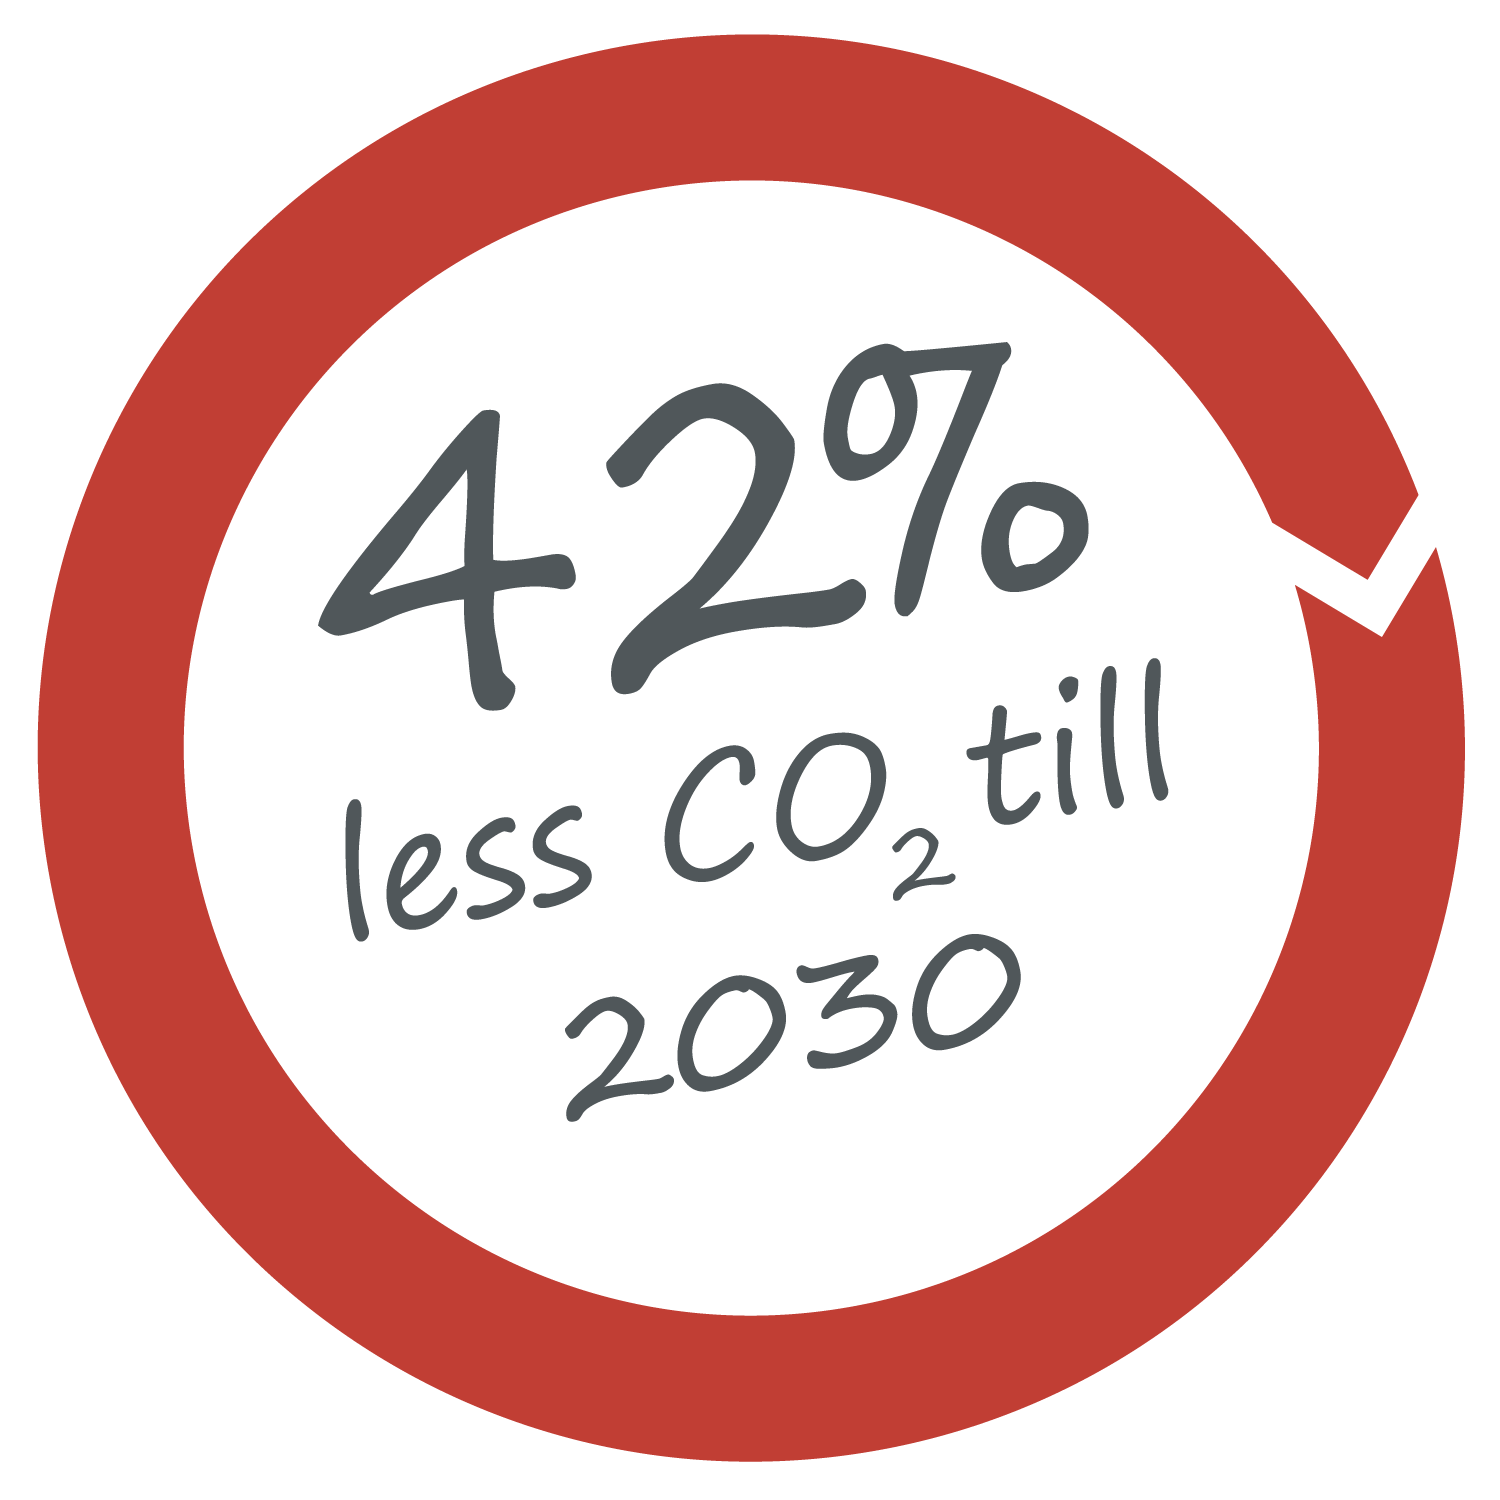 42% less CO2 till 2030